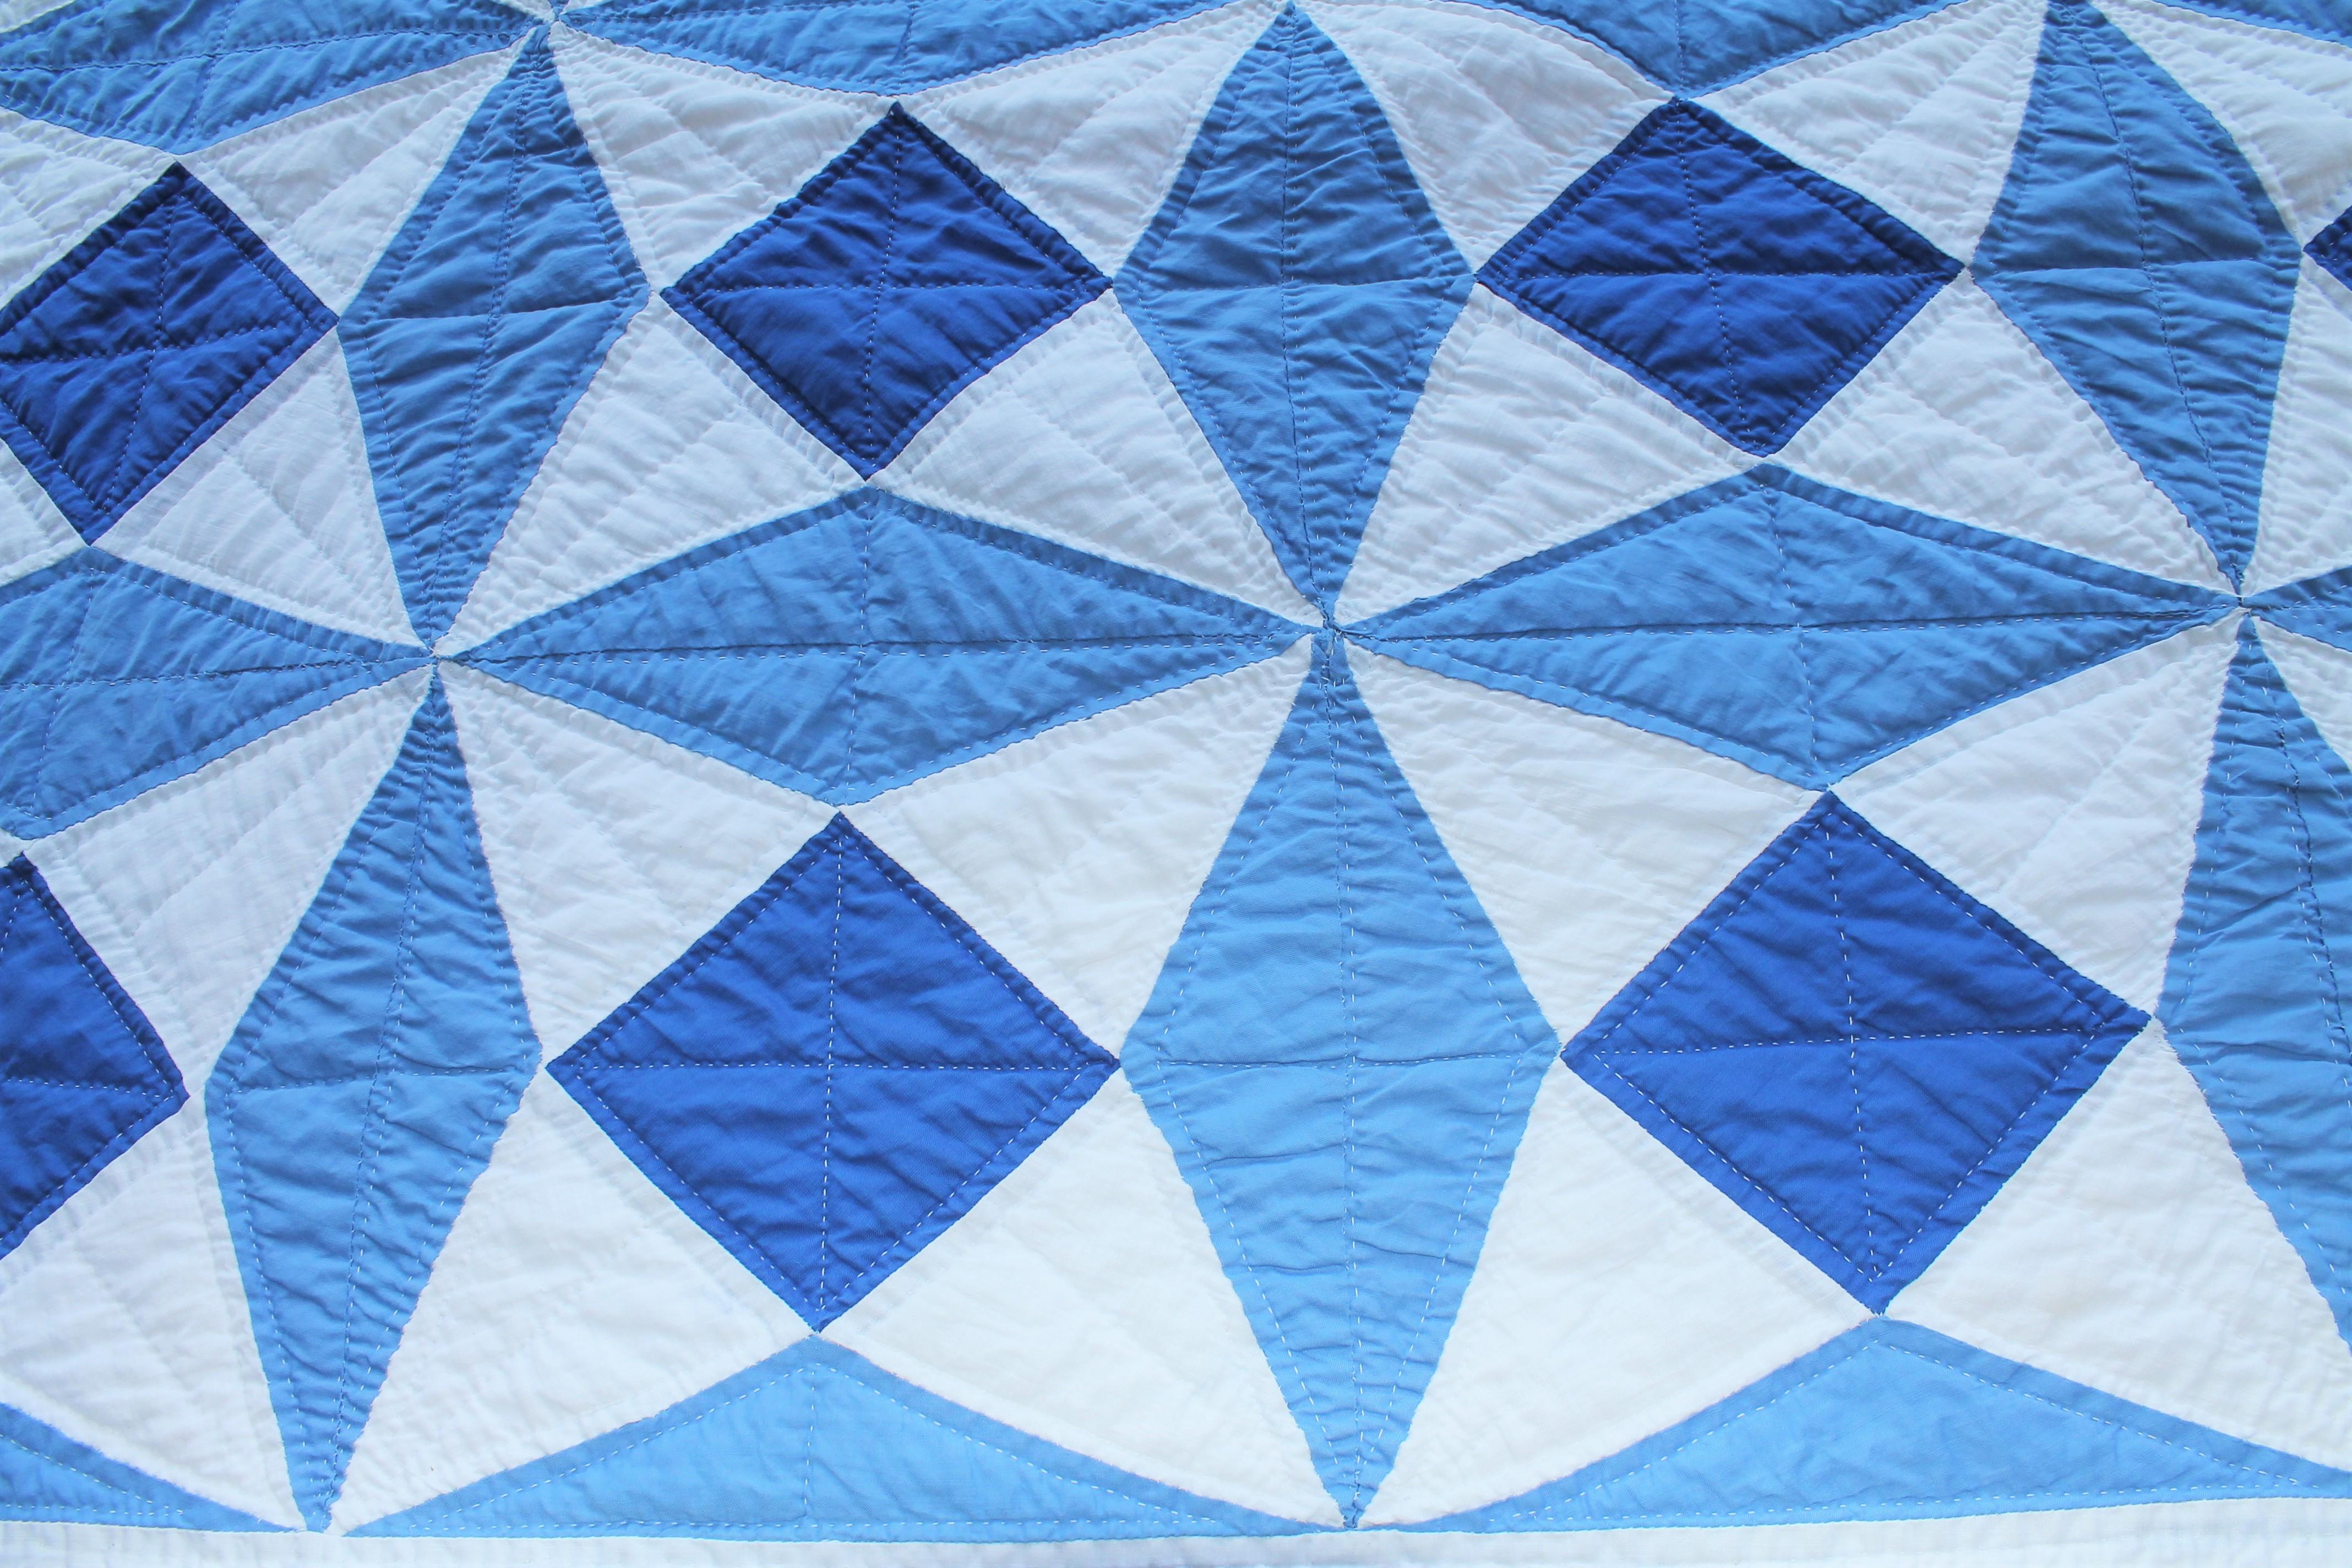 double diamond quilt pattern